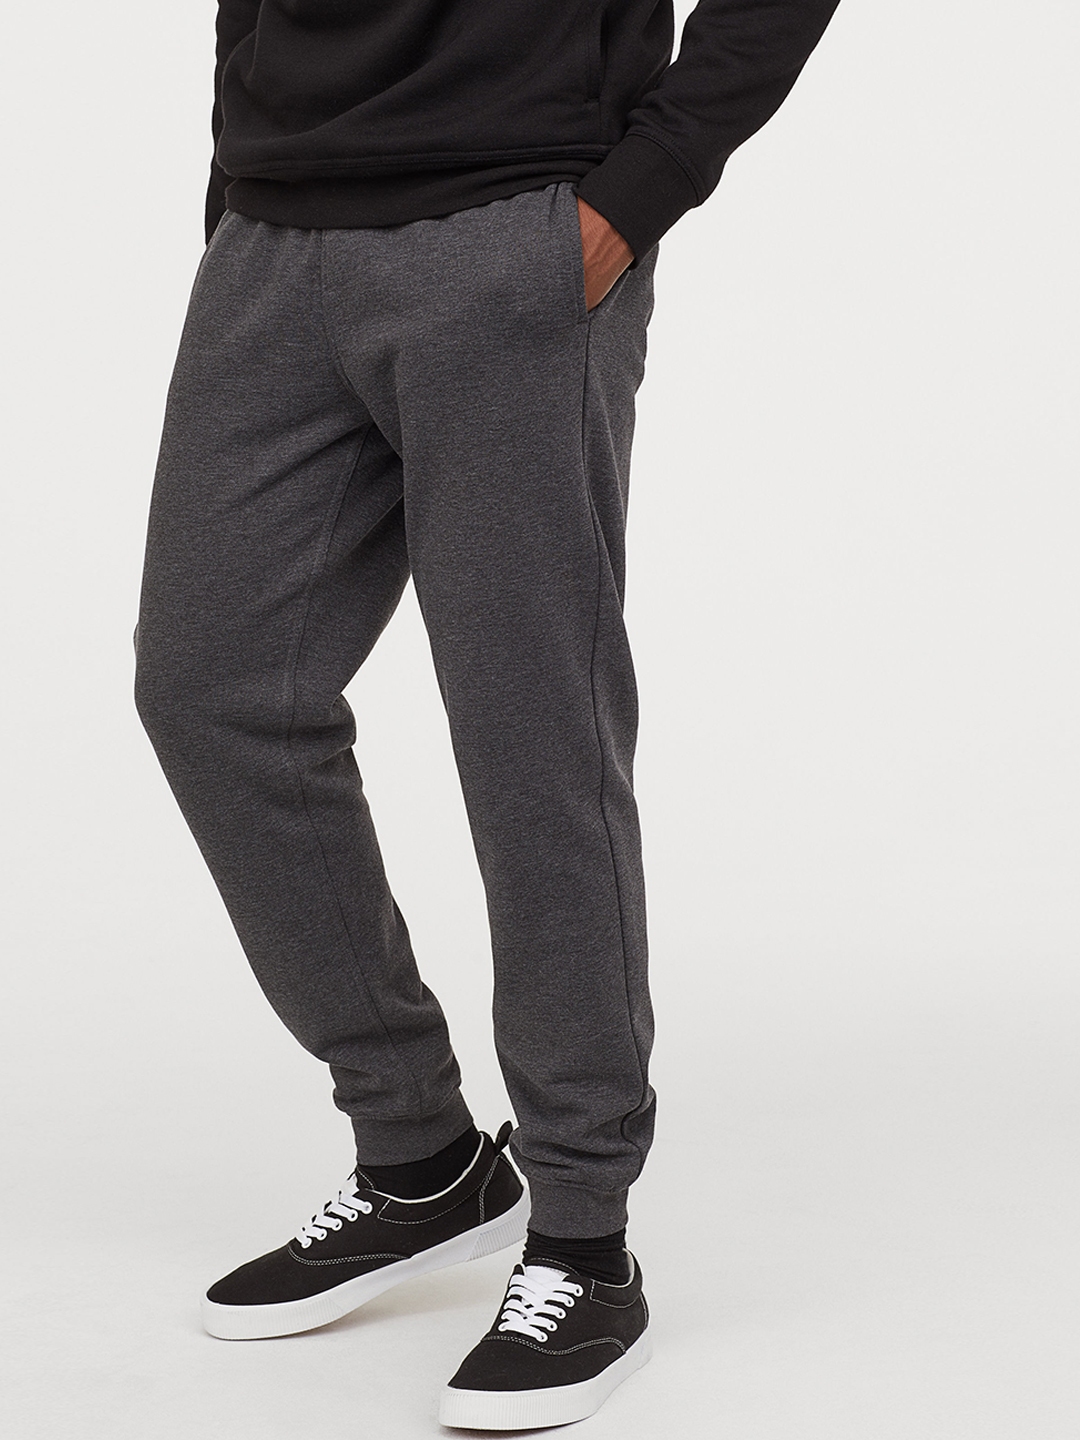 H&M Men Charcoal Grey Sweatpants Regular Fit